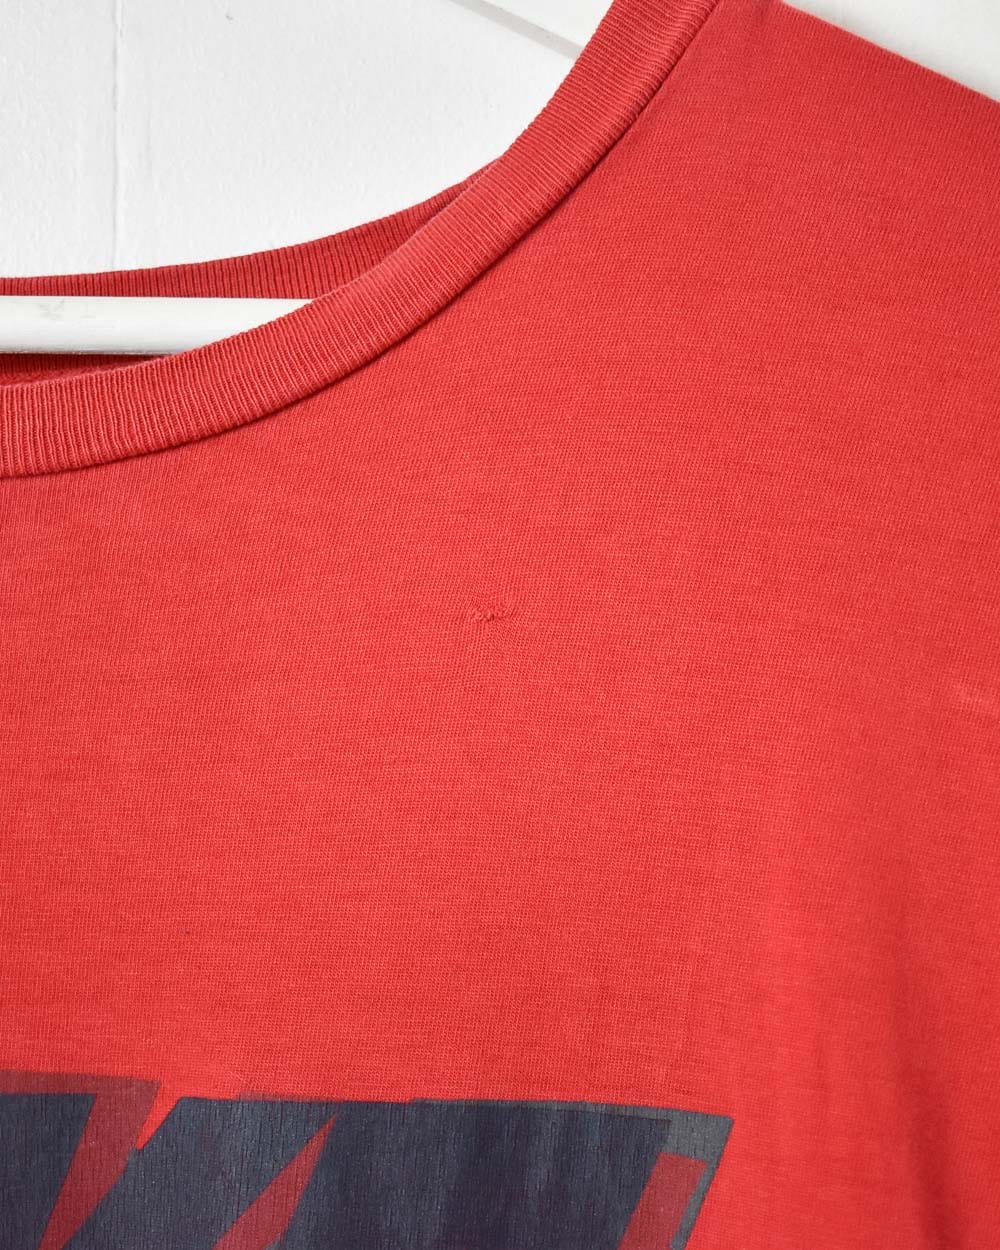 Red Nike T-Shirt - XX-Large